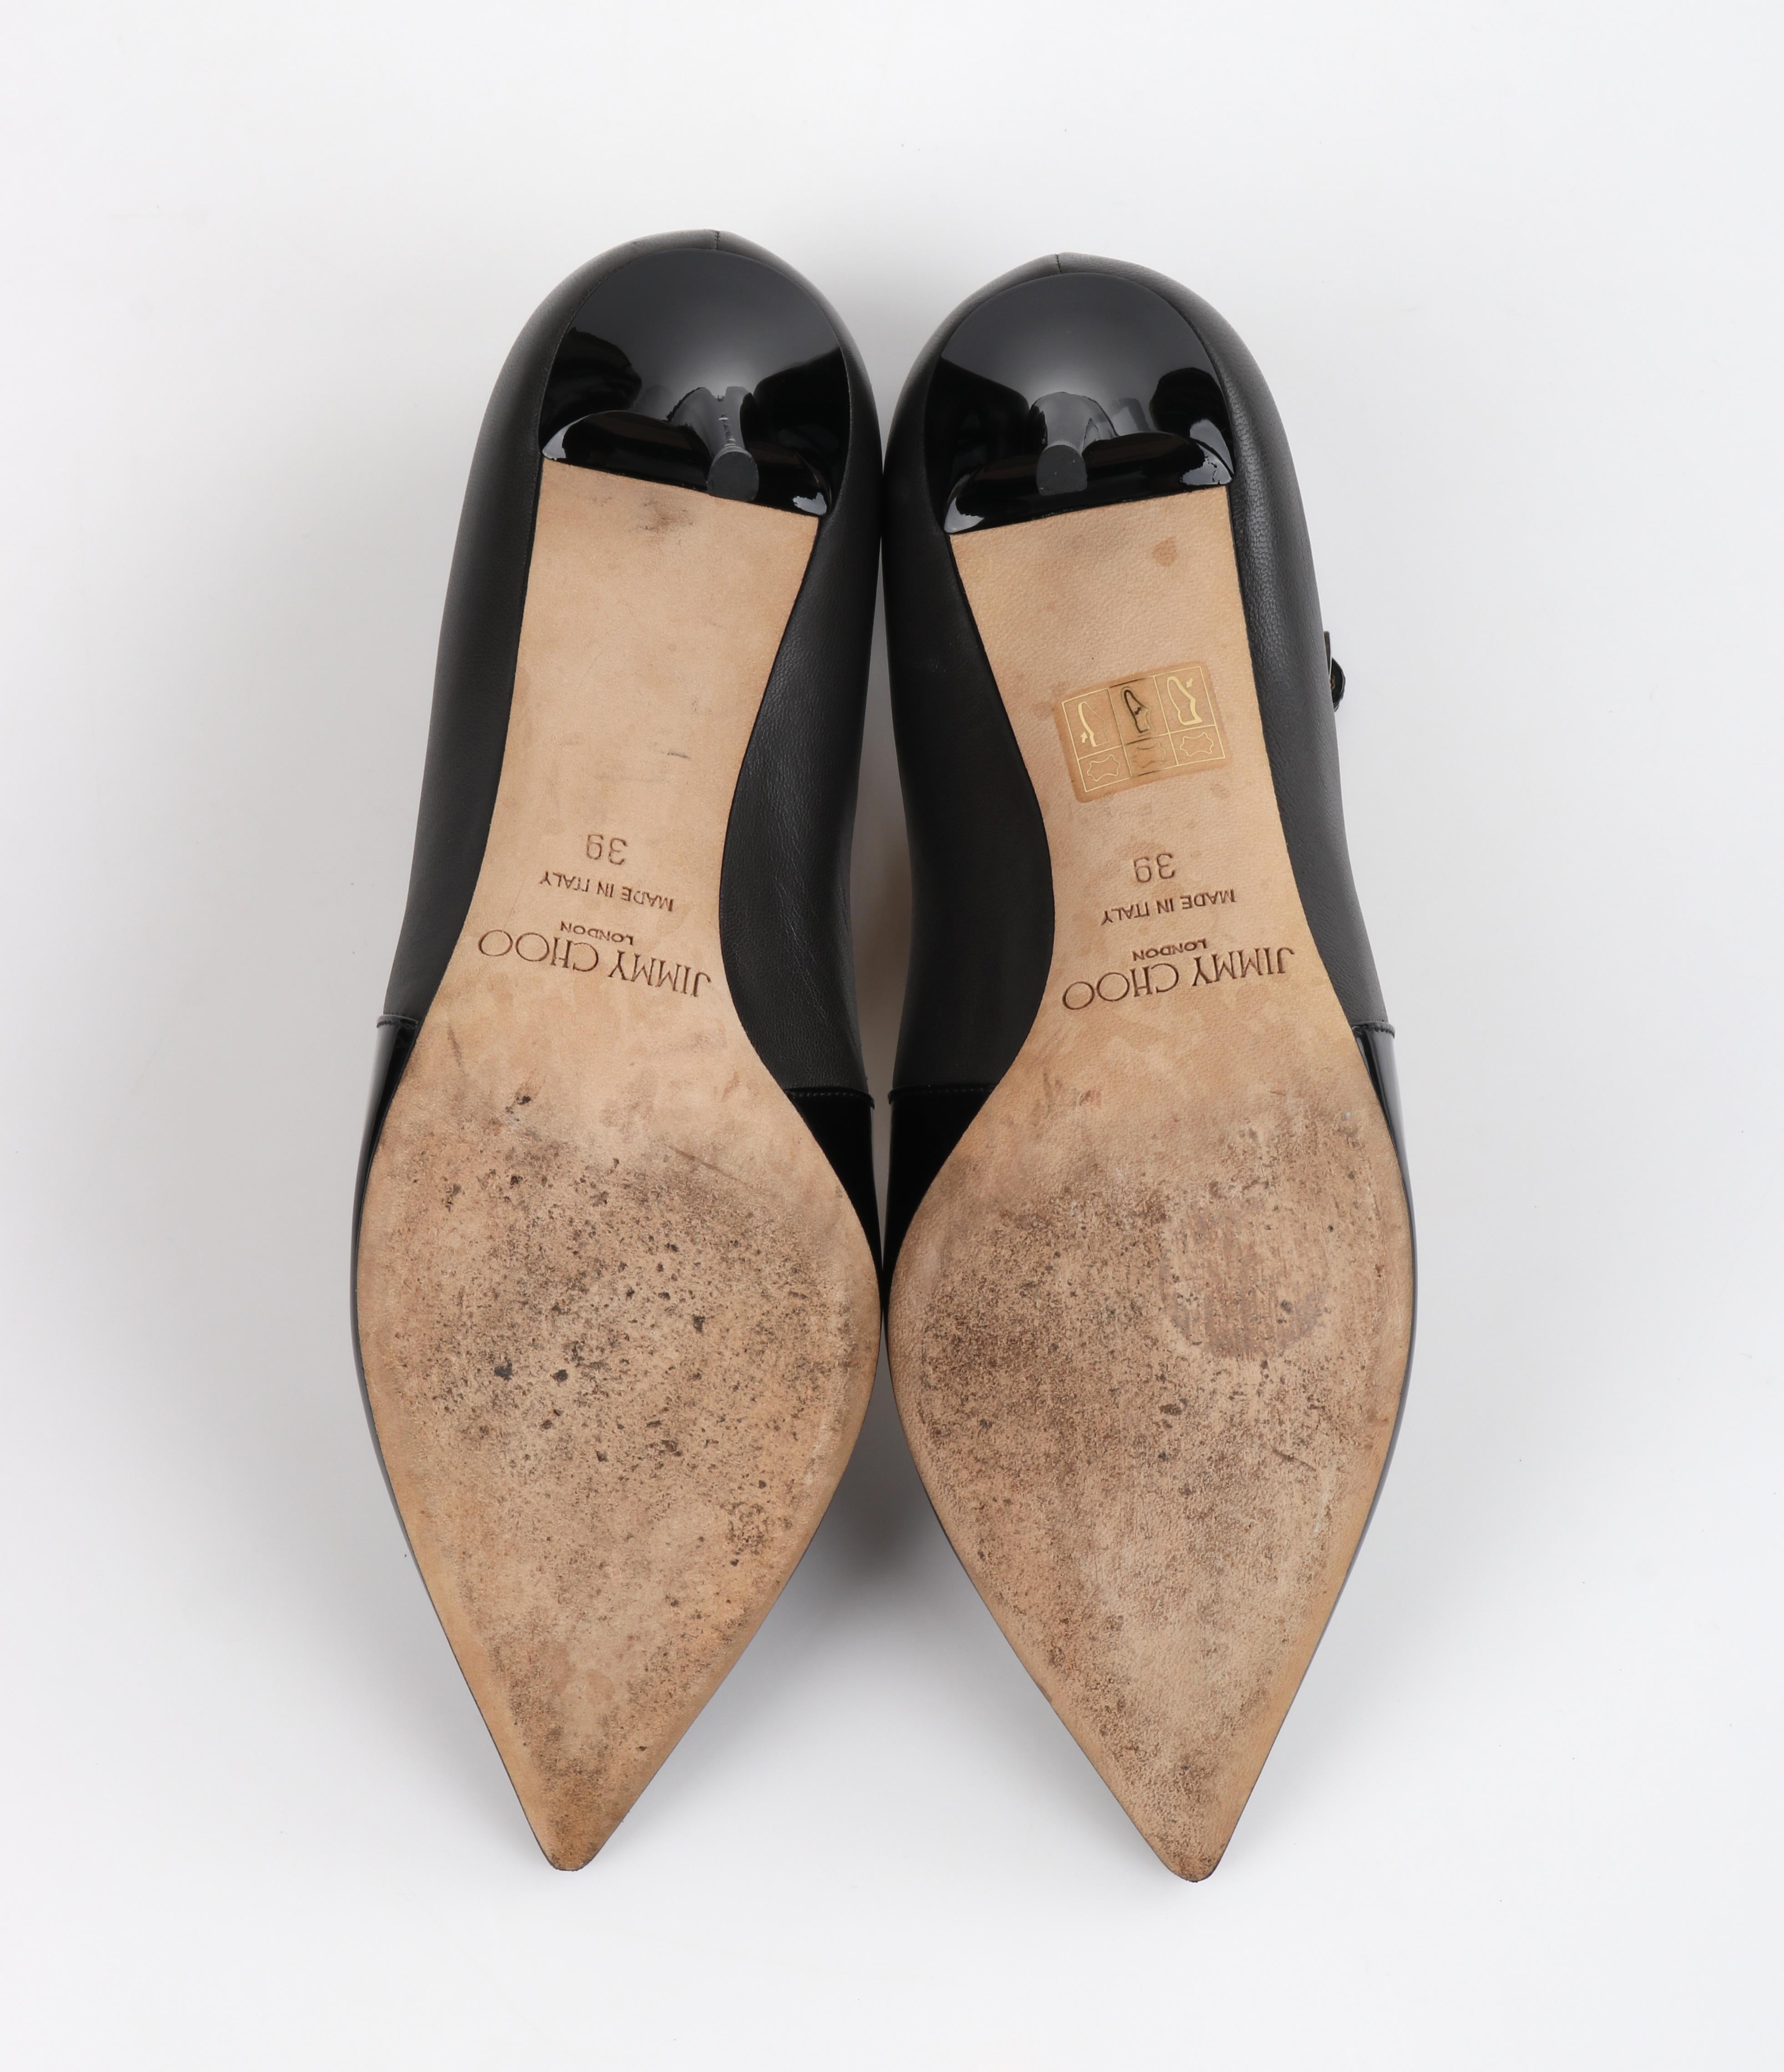 JIMMY CHOO “Madera” Gray Black Leather Criss Cross Strap Pointed Toe Pump Heels 3